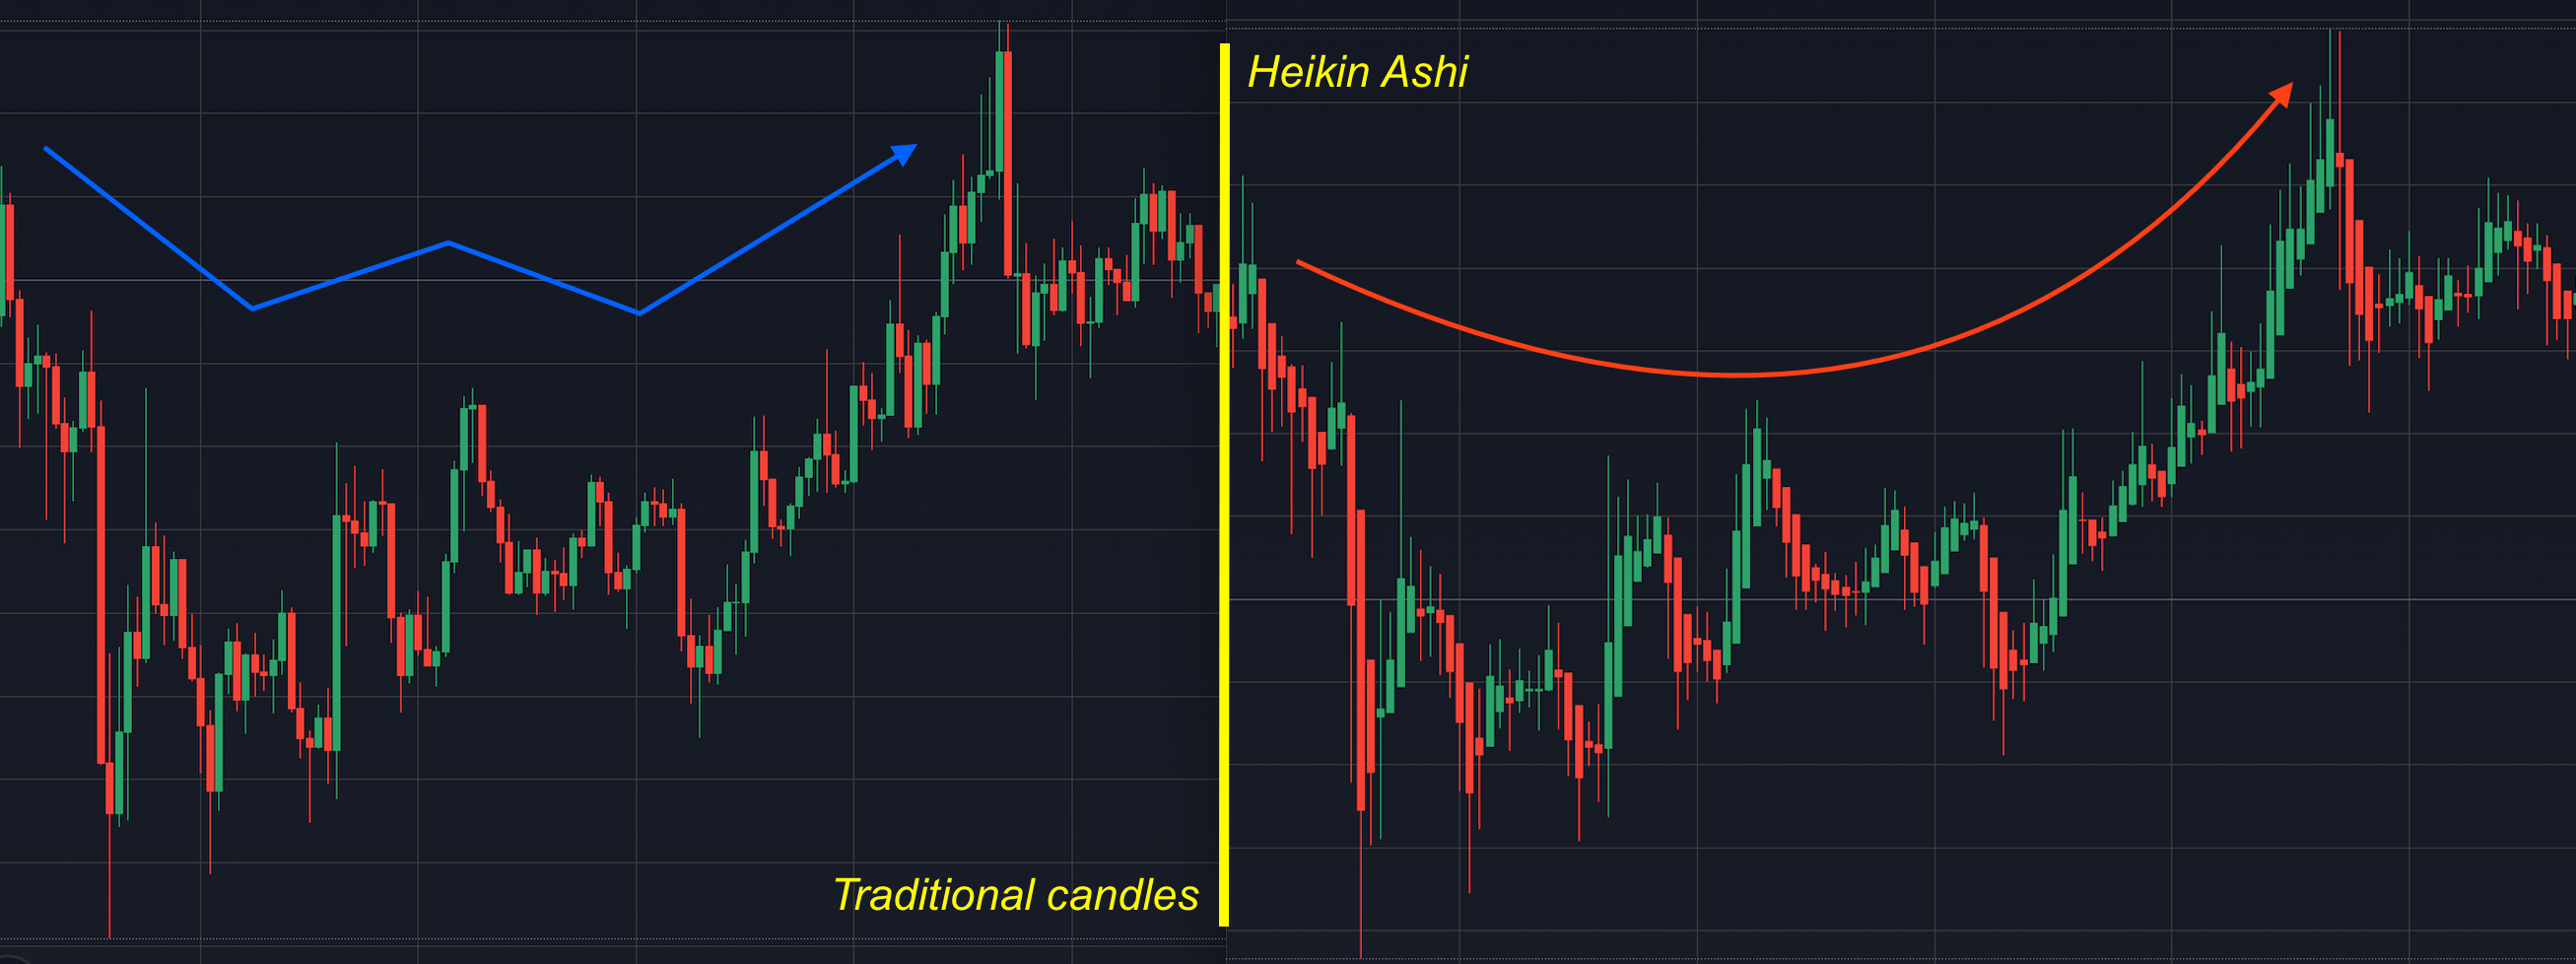 Heikin Ashi candles vs Traditional candles - bb51b204 0086 4322 a967 85092bd61553